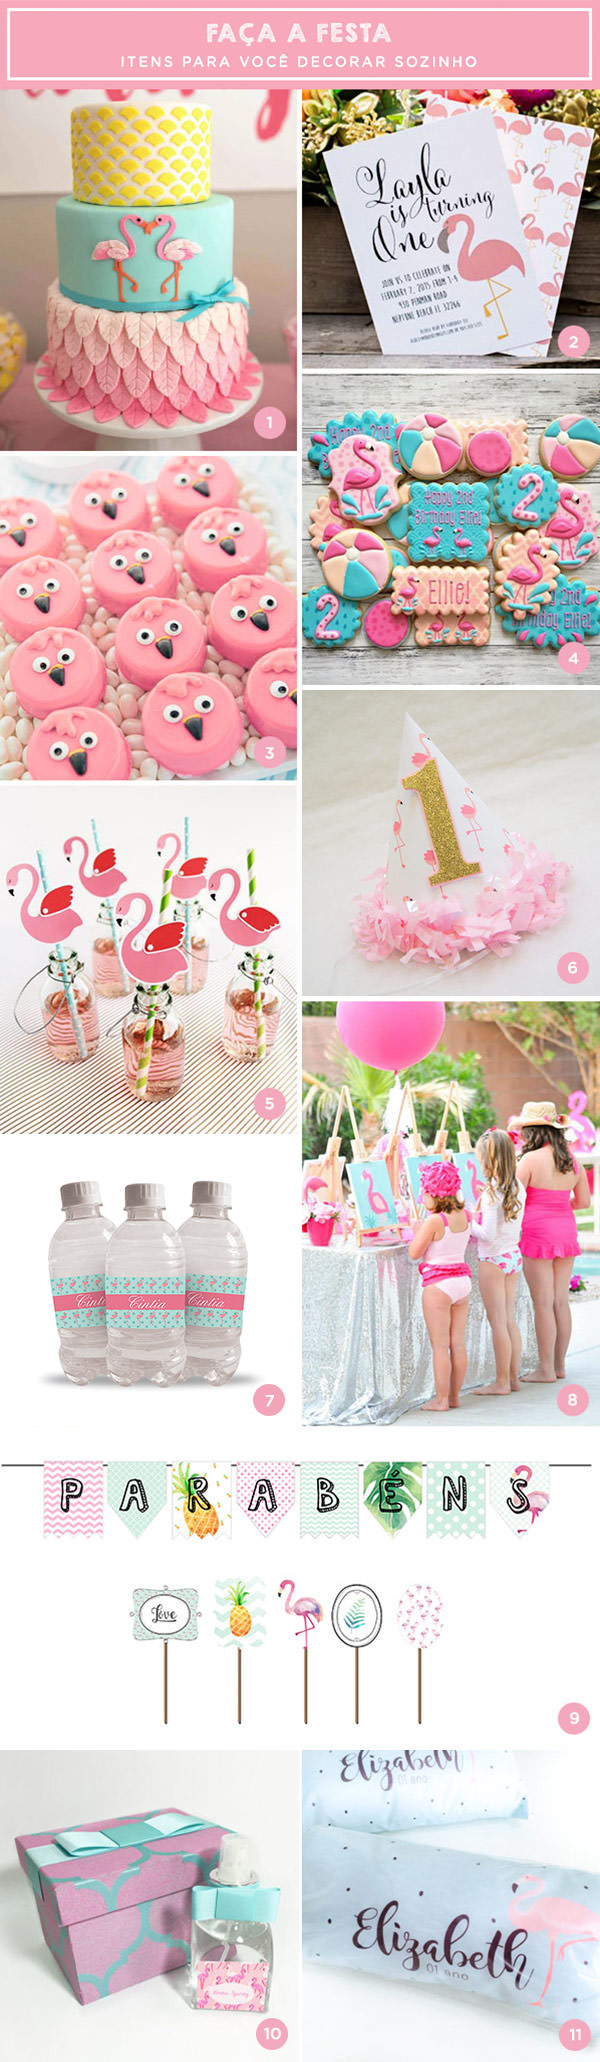 decoracao-festa-infantil-tema-flamingo-board-inspiracao